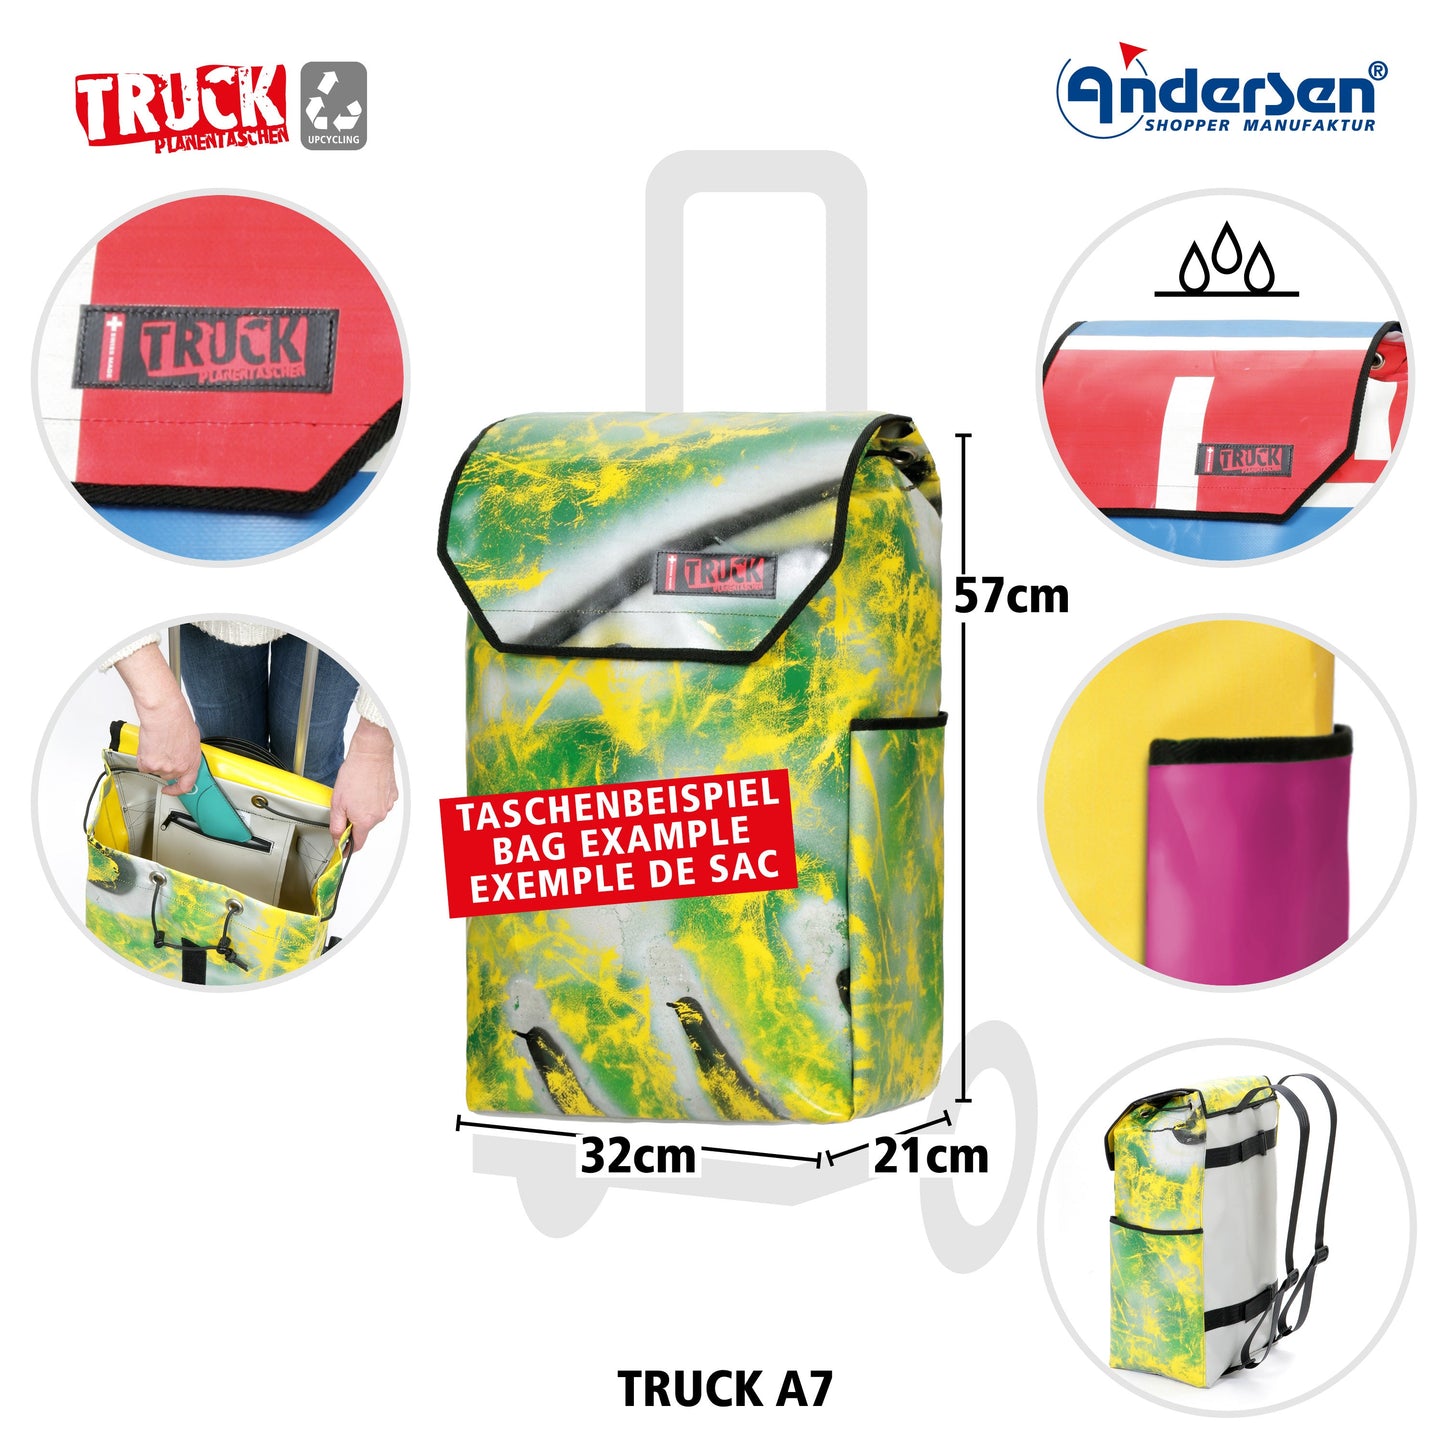 Andersen Shopper Manufaktur-Unus Shopper Fun Truck A7-www.shopping-trolley.ch-bild4